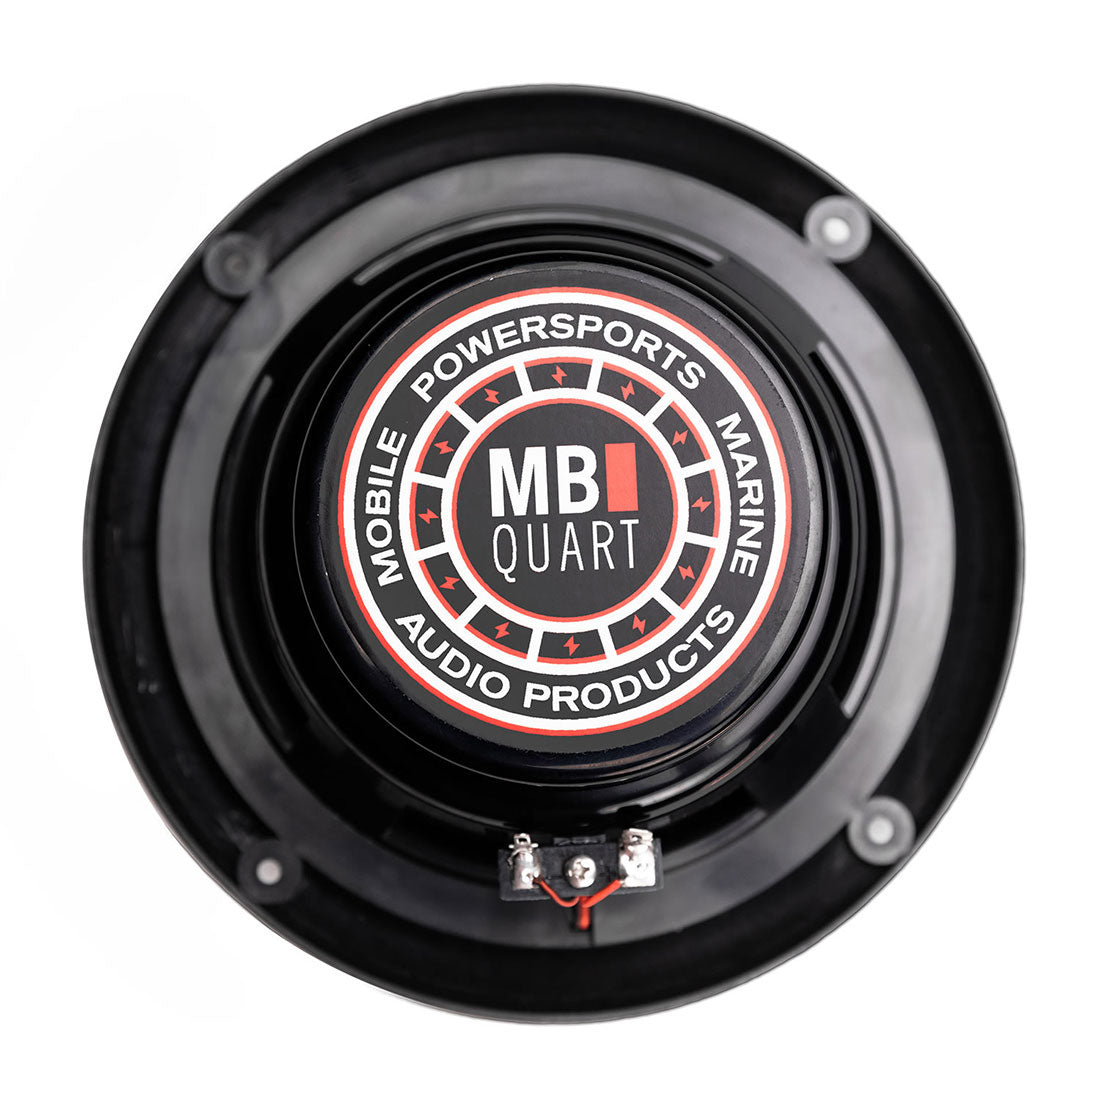 MB Quart NF1-116B bottom